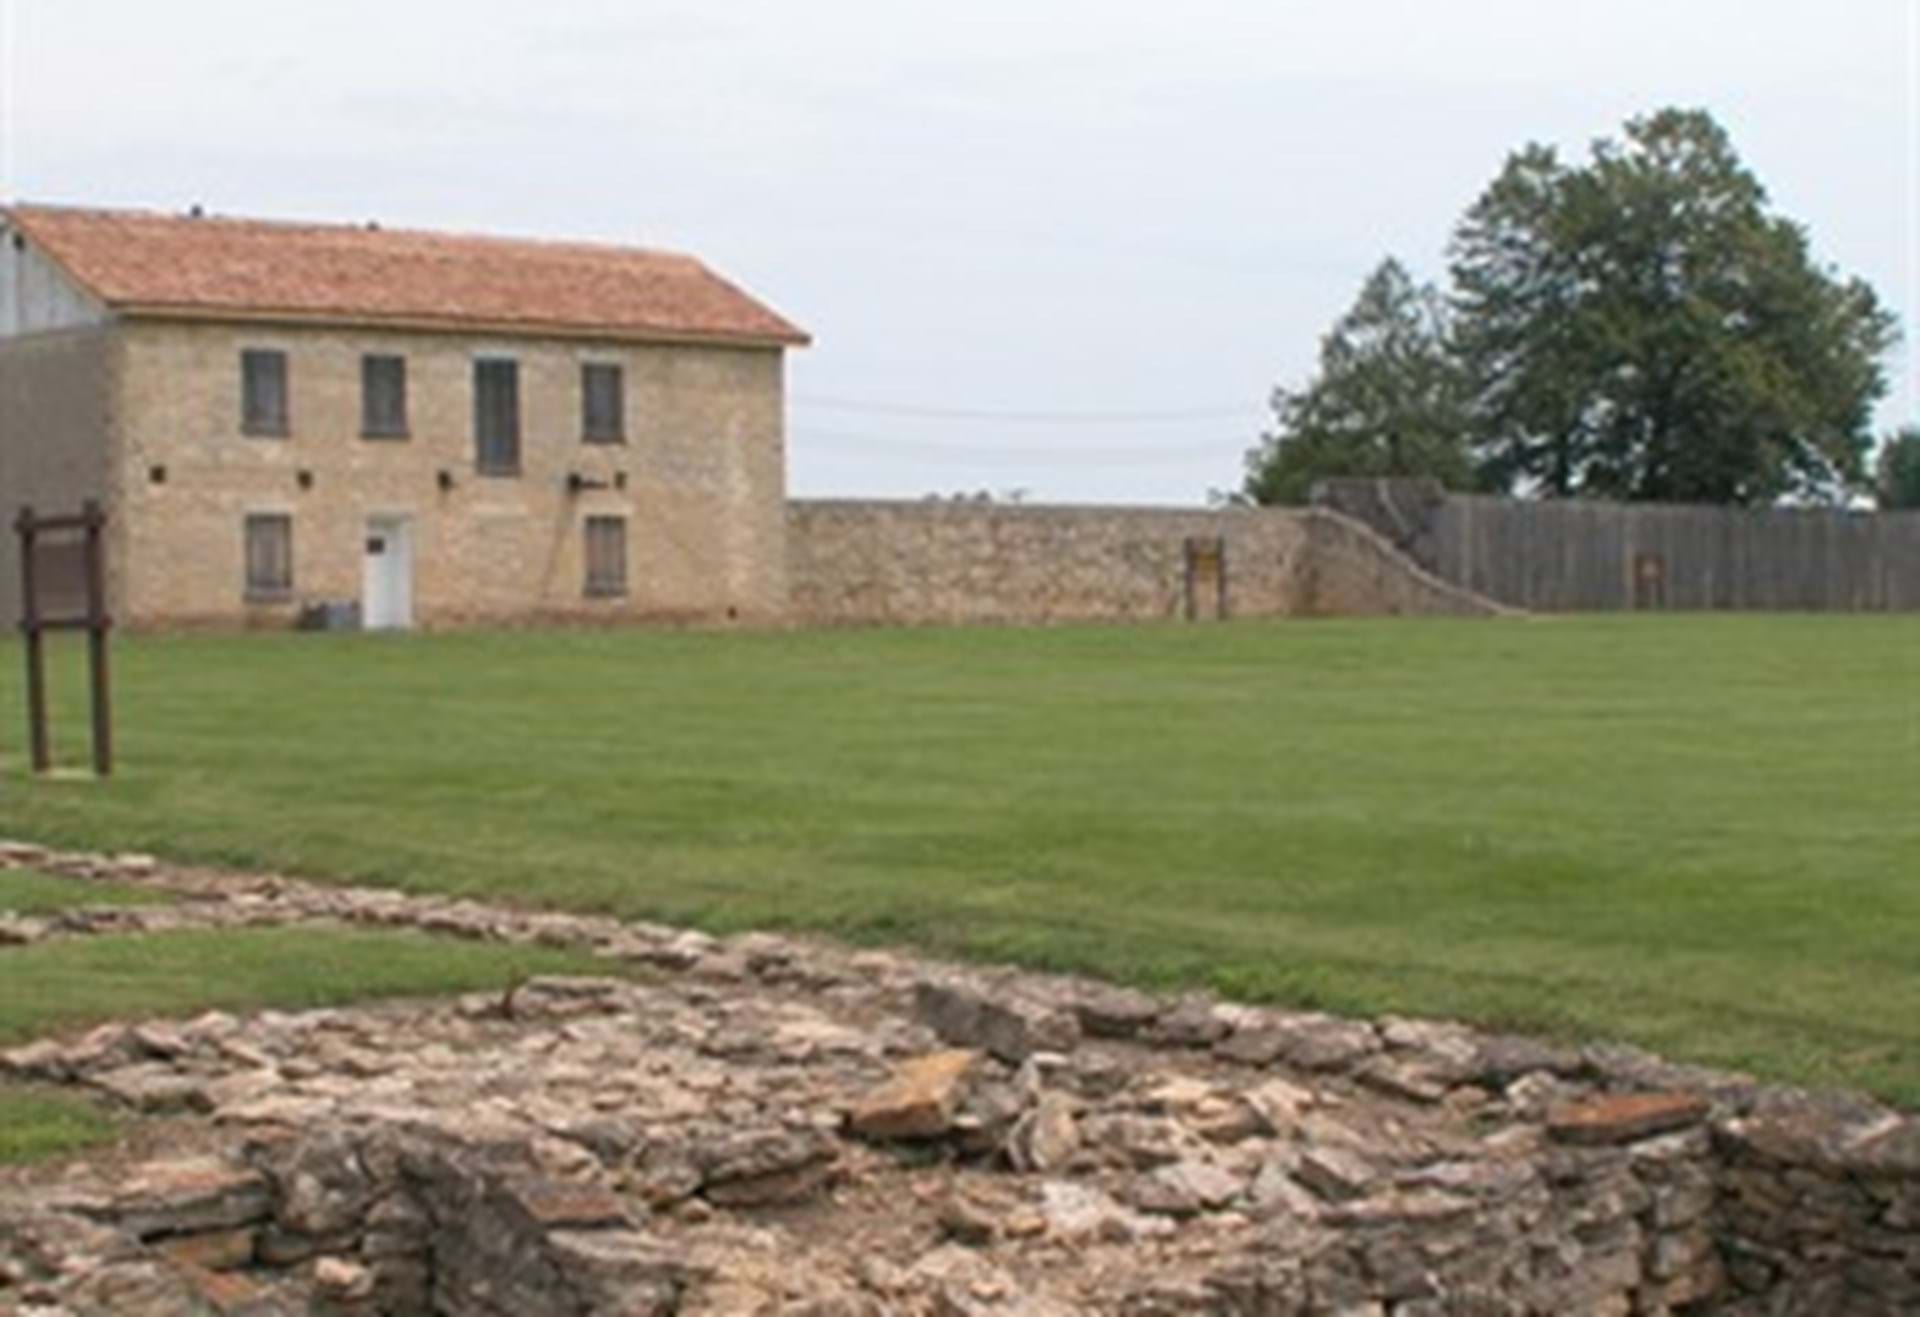 Fort Atkinson State Preserve